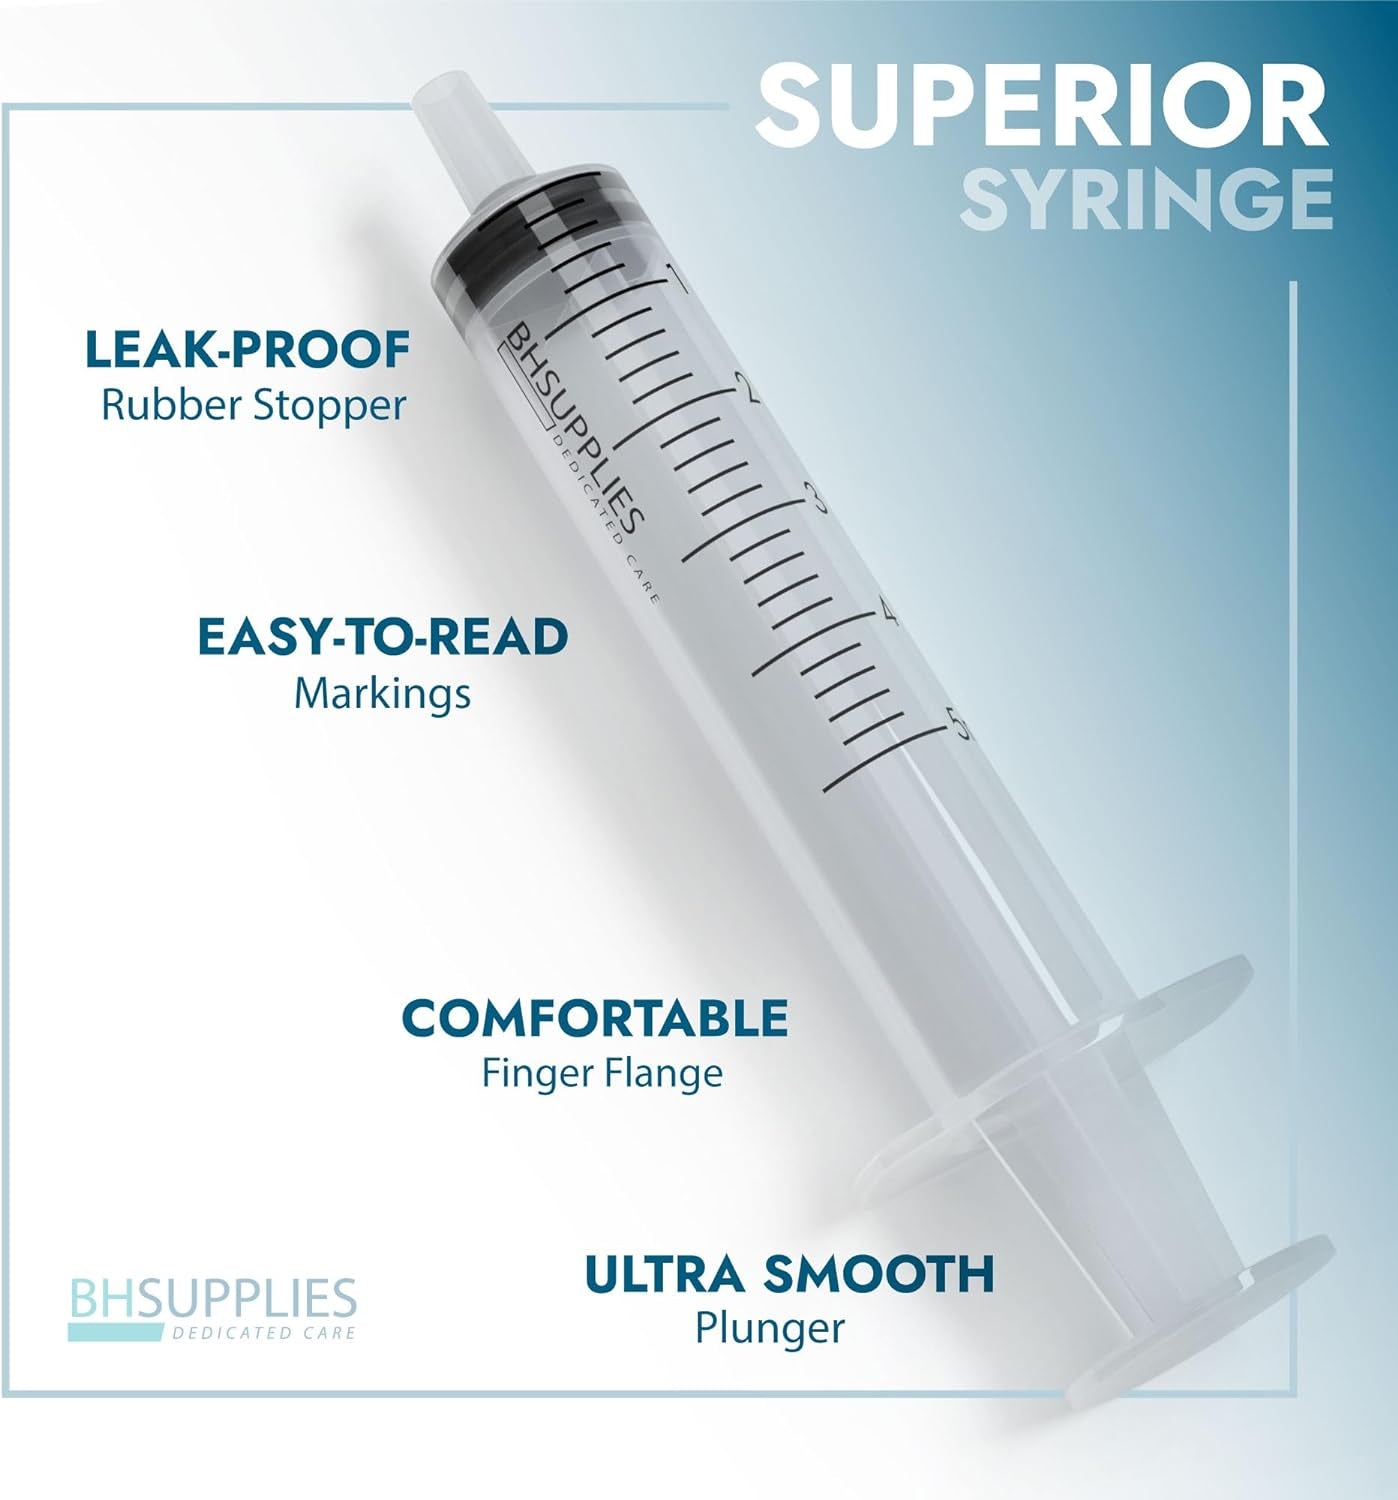 1Ml Luer Slip Tip Syringes (No Needle) - Sterile, Individually Wrapped - 100 Syringes